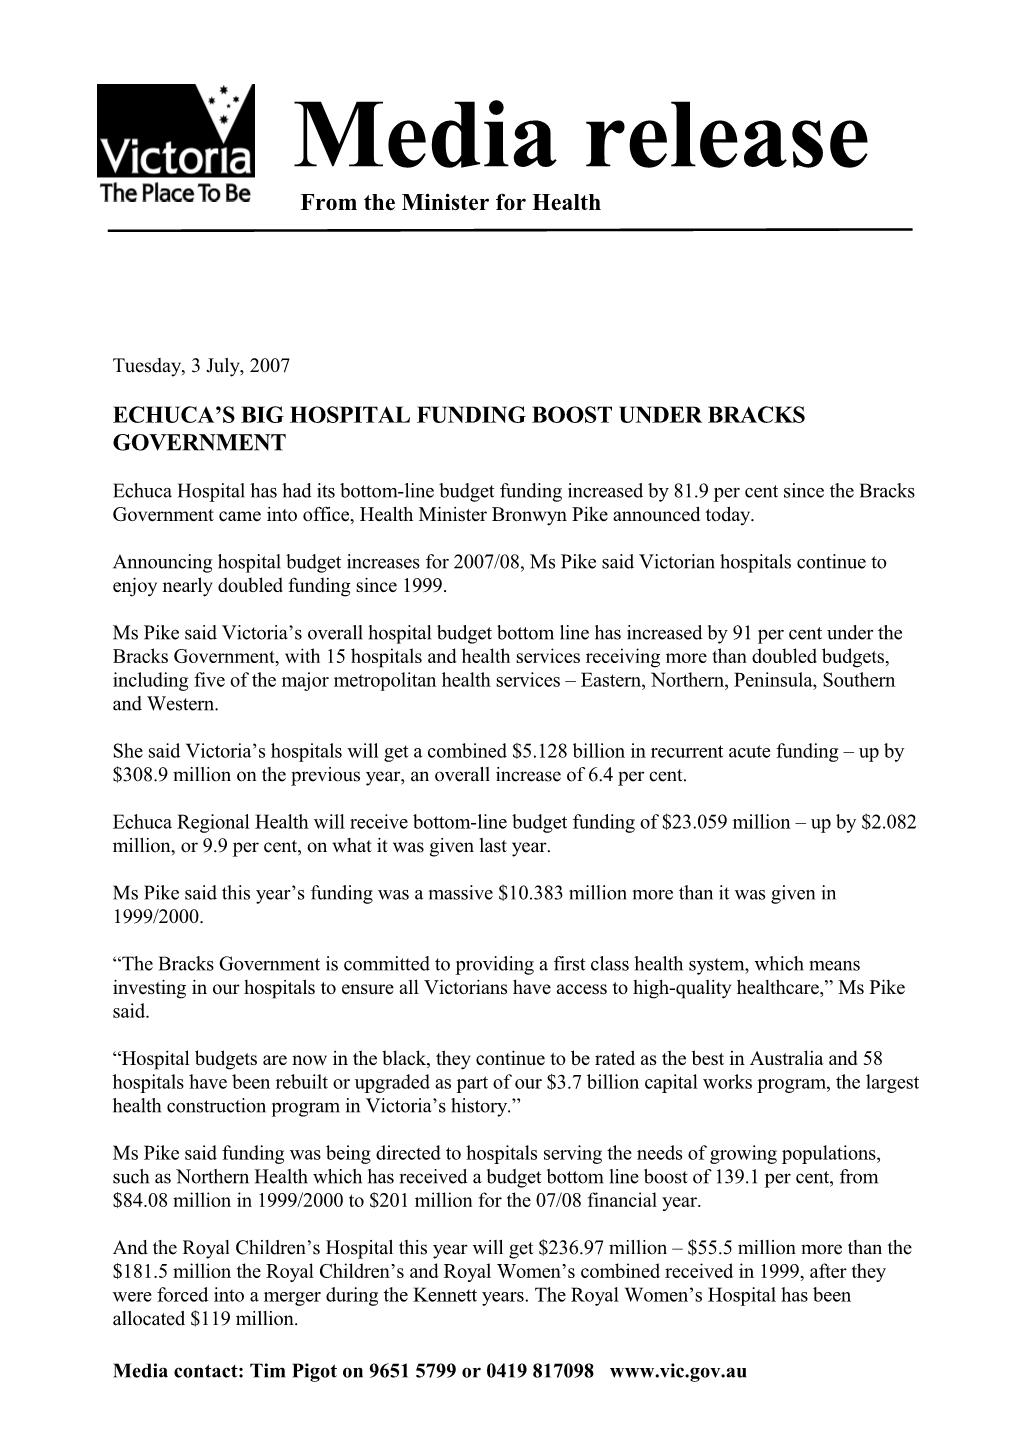 Echuca S Big Hospital Funding Boost Under Bracks Government